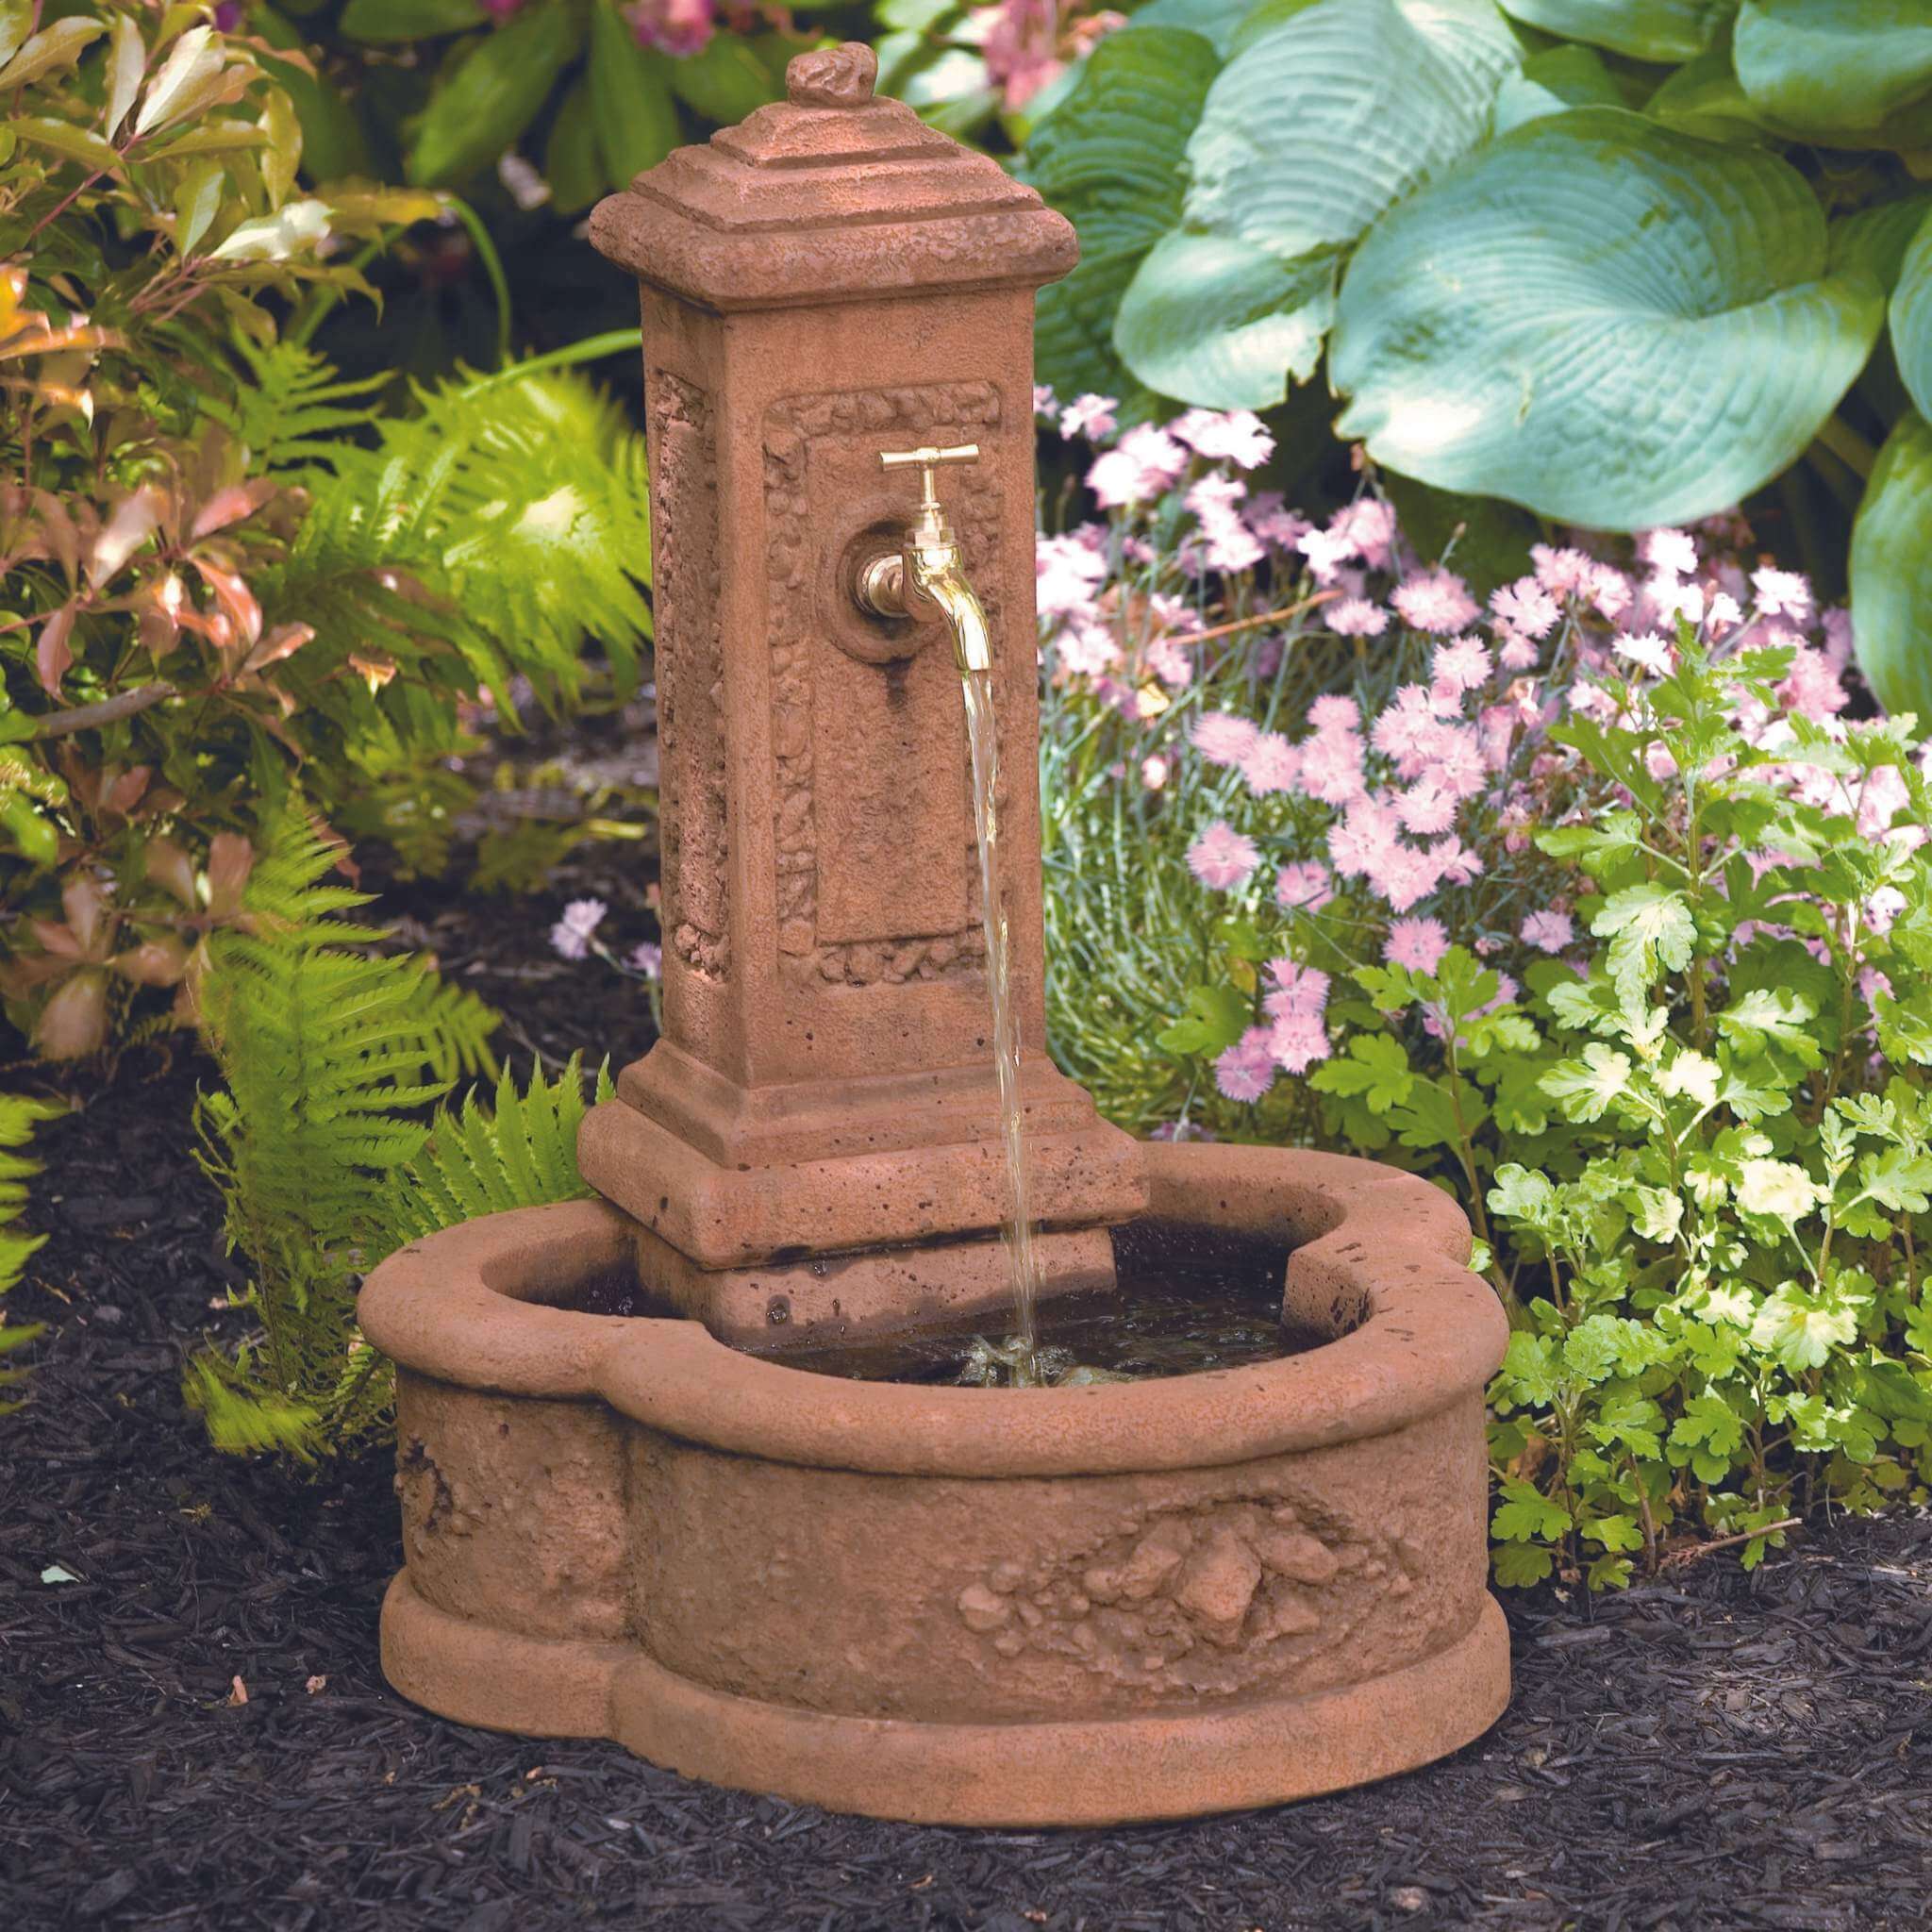 Petite Garden Concrete Fountain - Massarellis #3556